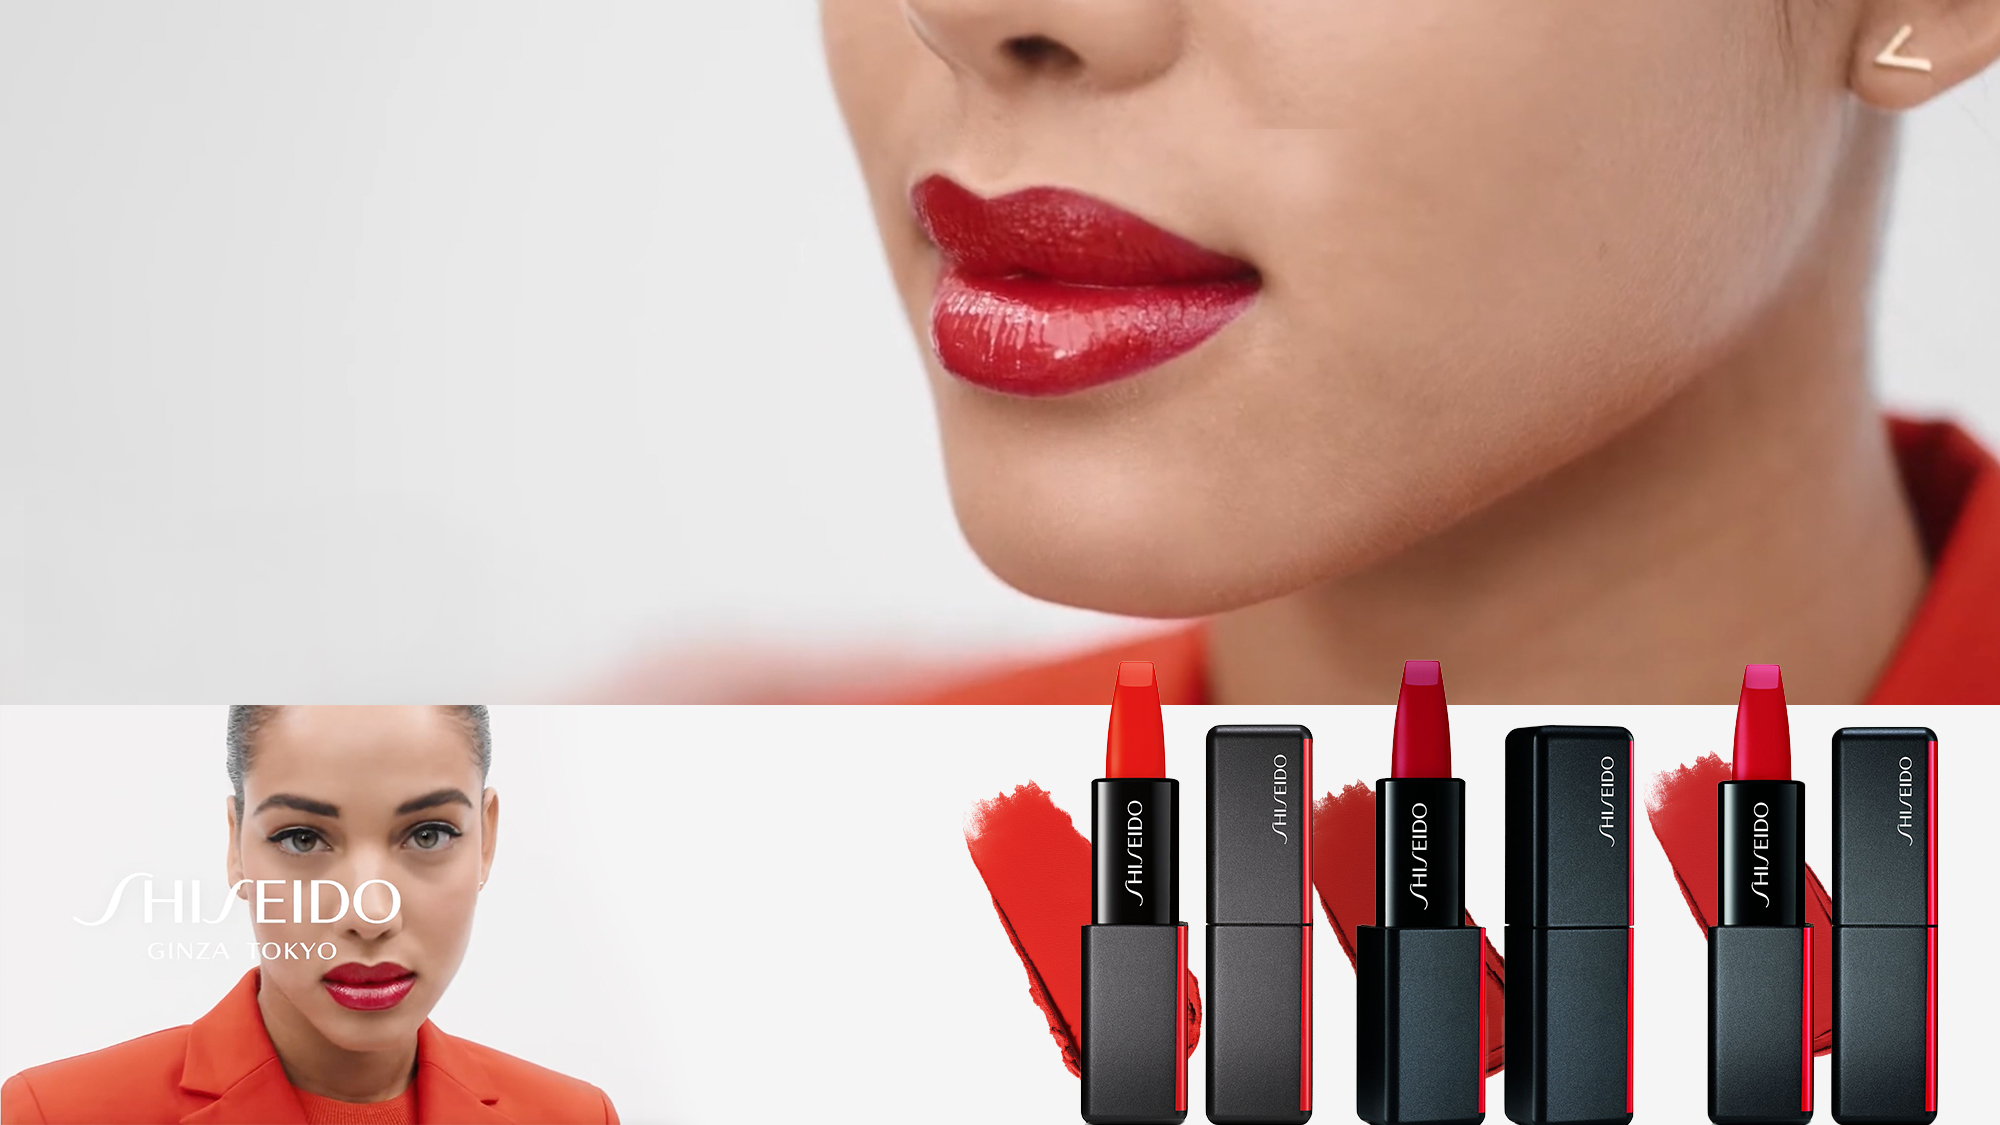 blog-shiseido-red-look-2000x1125px.jpg